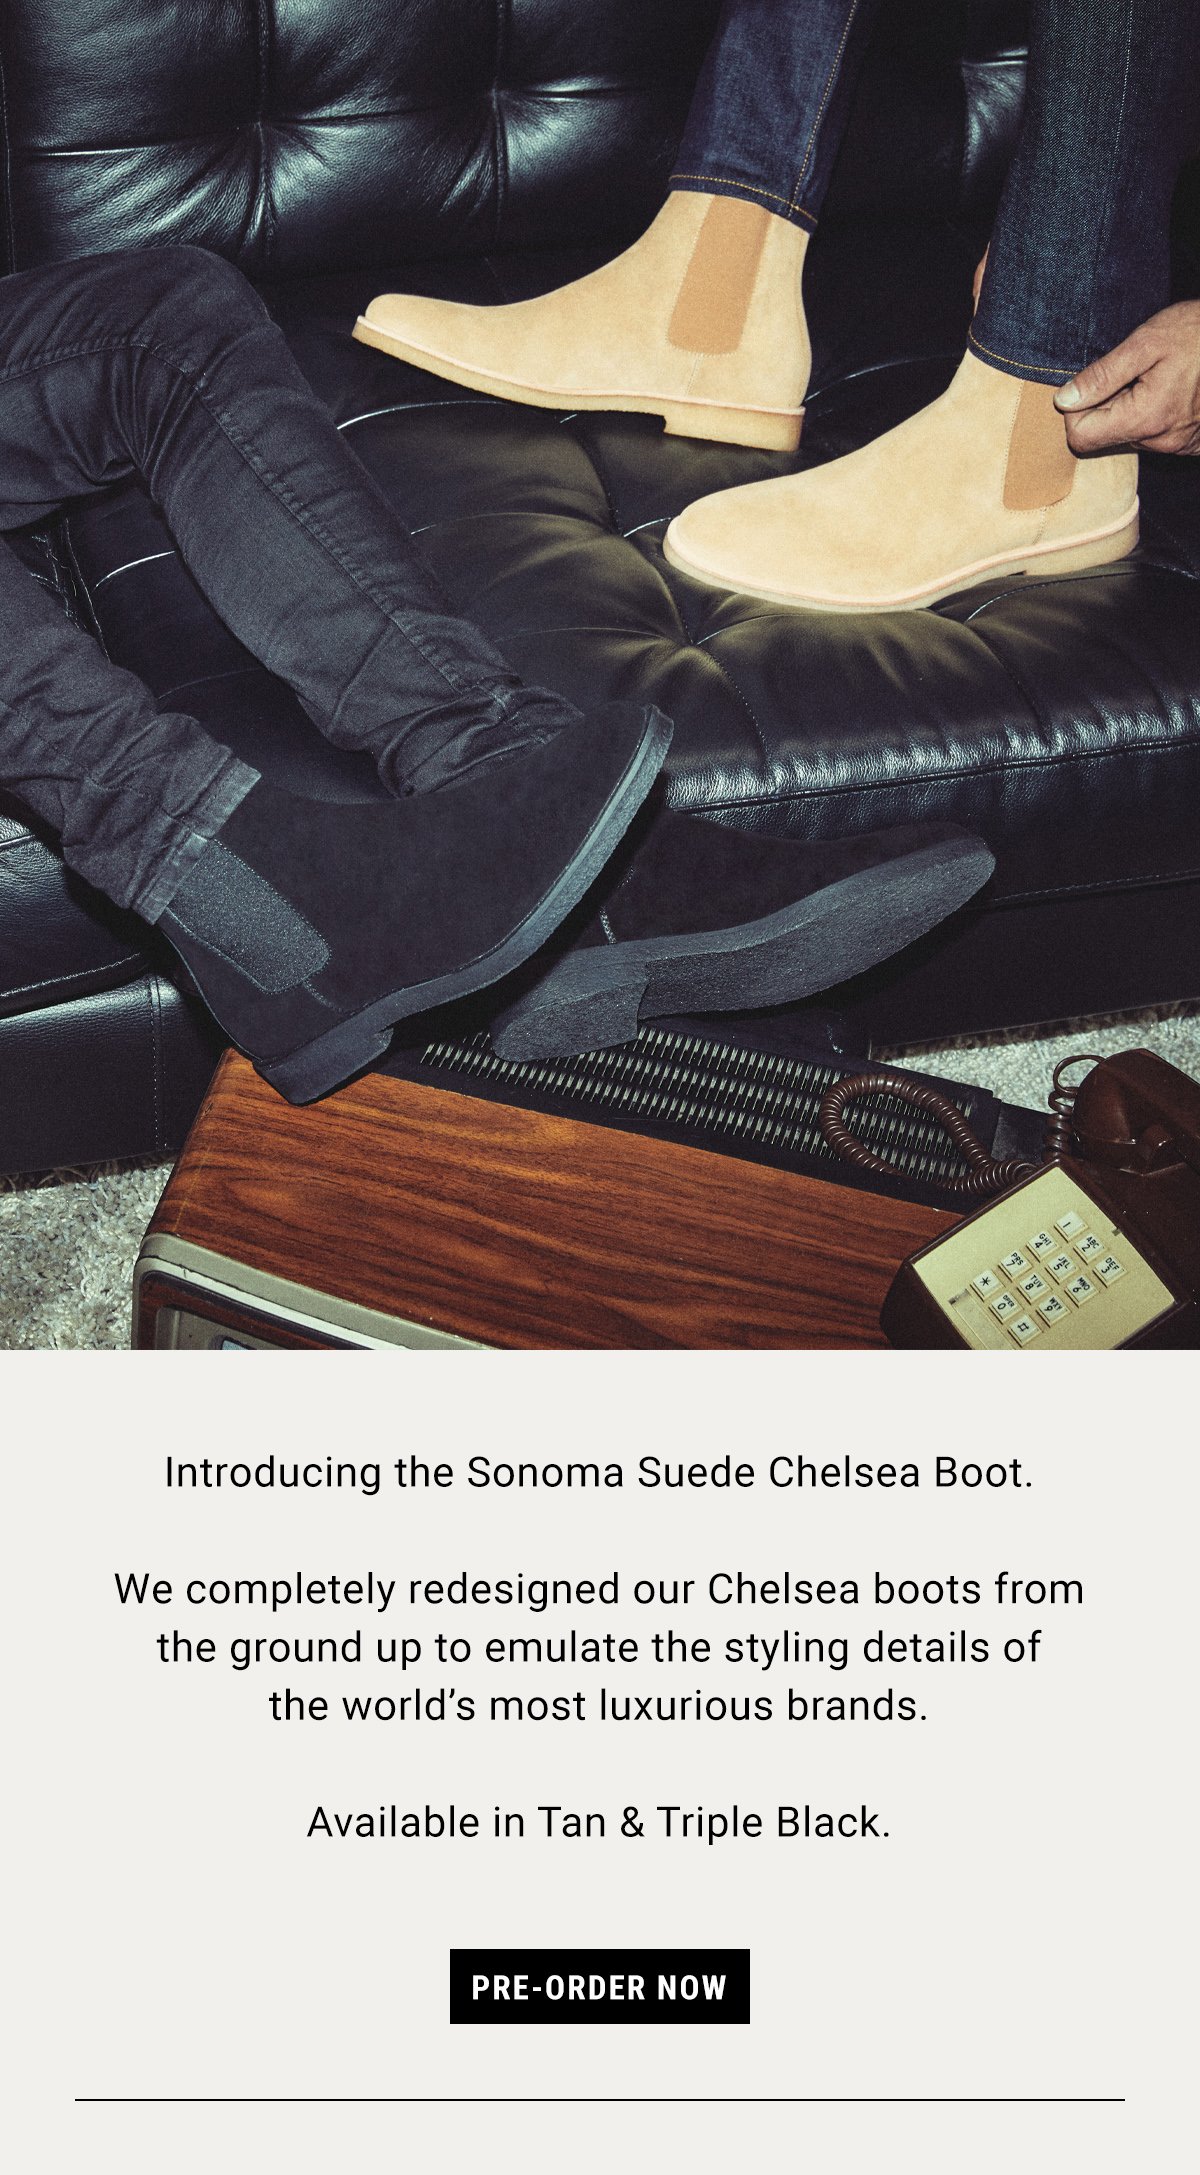 new republic chelsea boots black